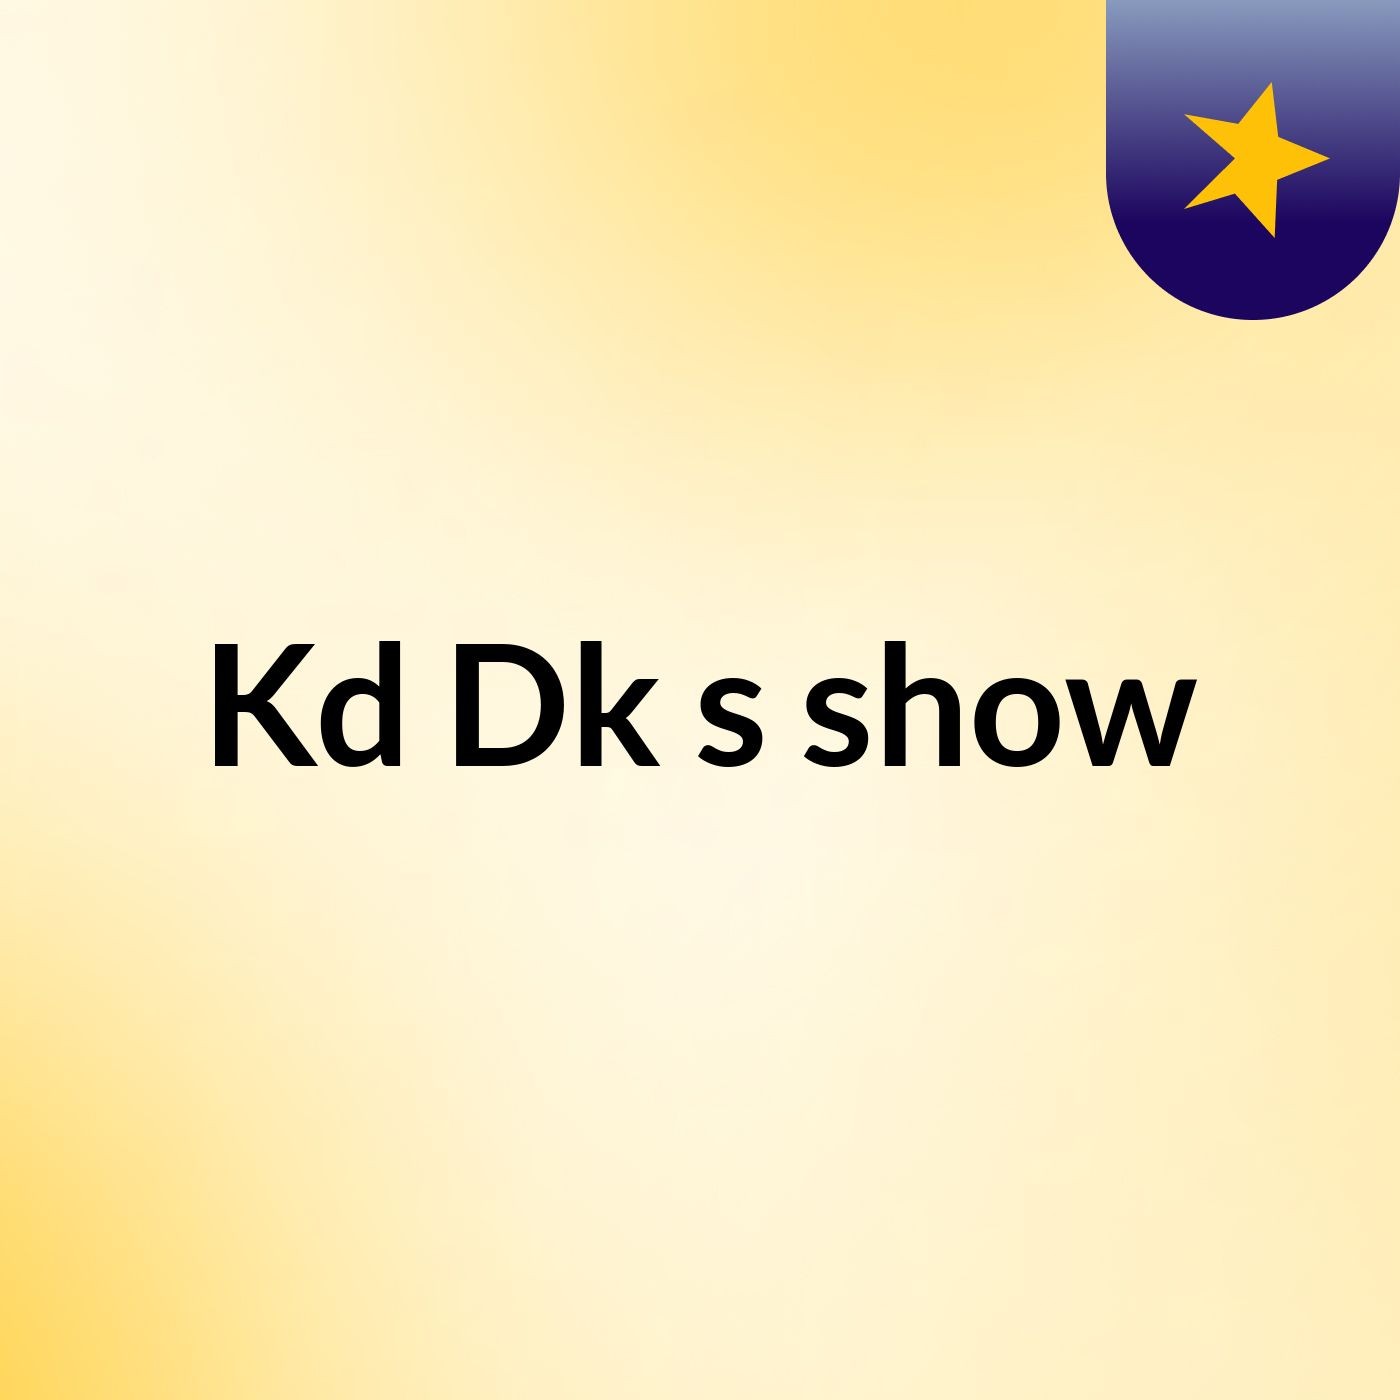 Kd Dk's show